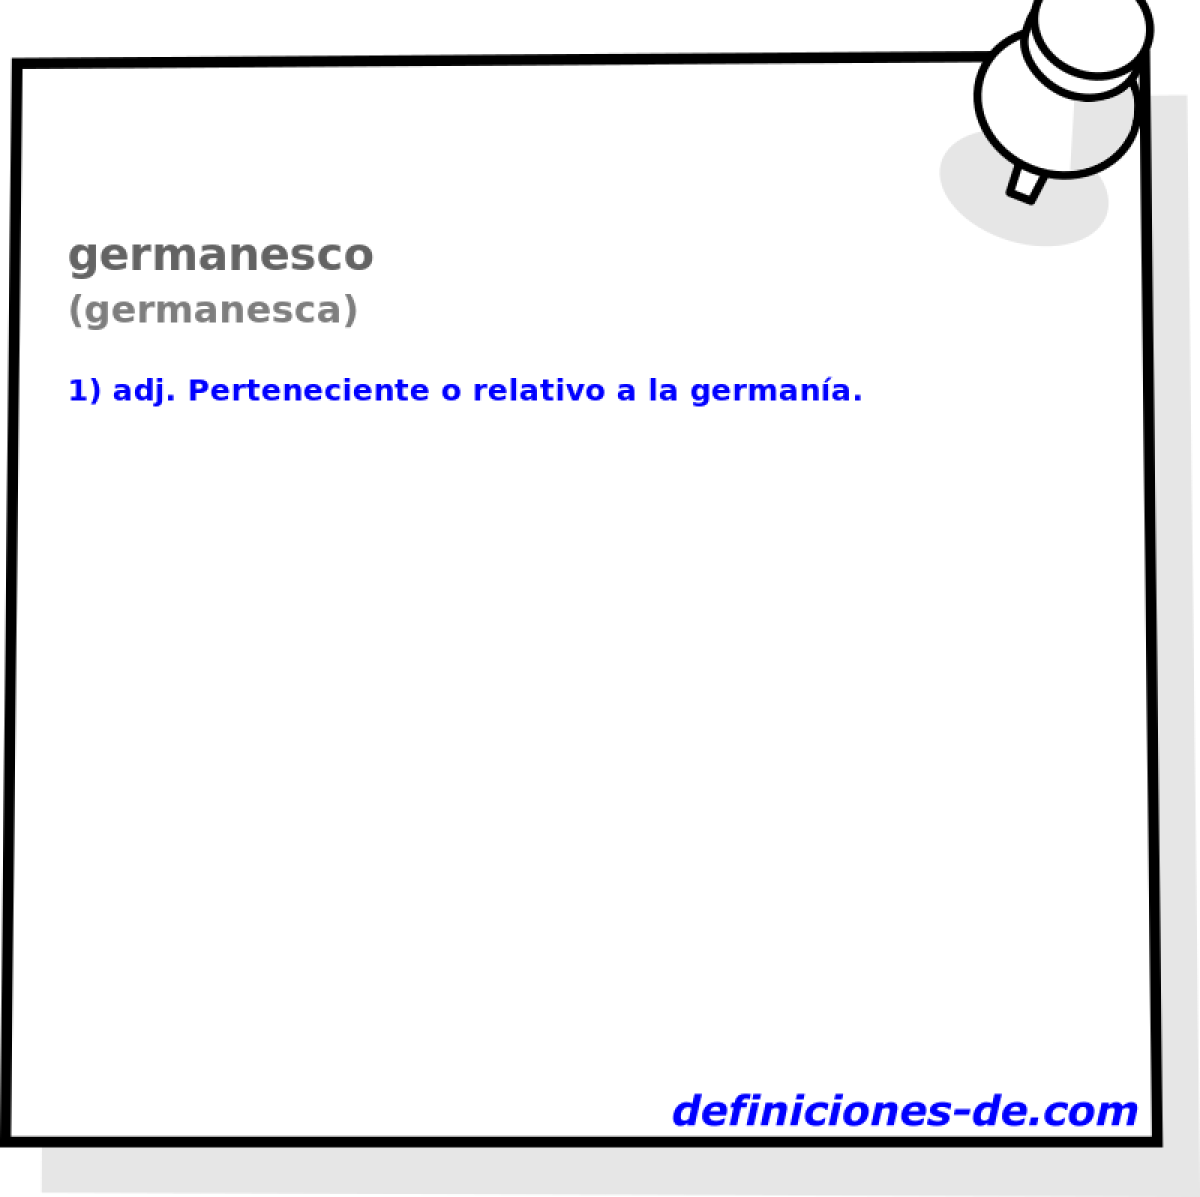 germanesco (germanesca)